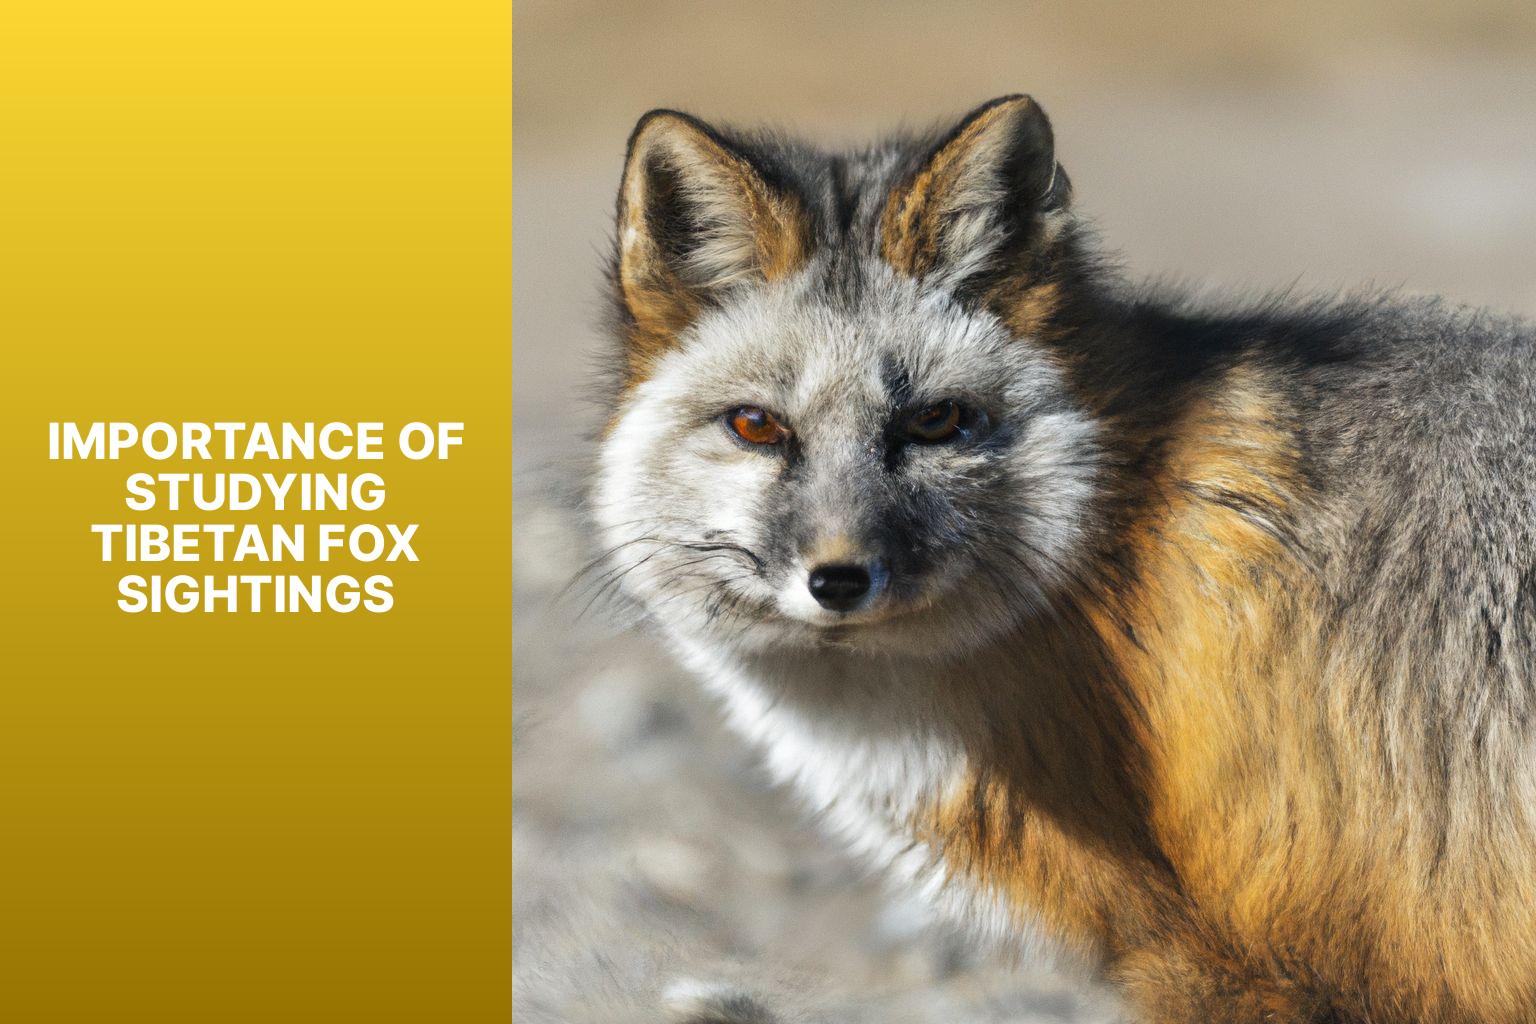 Importance of Studying Tibetan Fox Sightings - Tibetan Fox sightings 